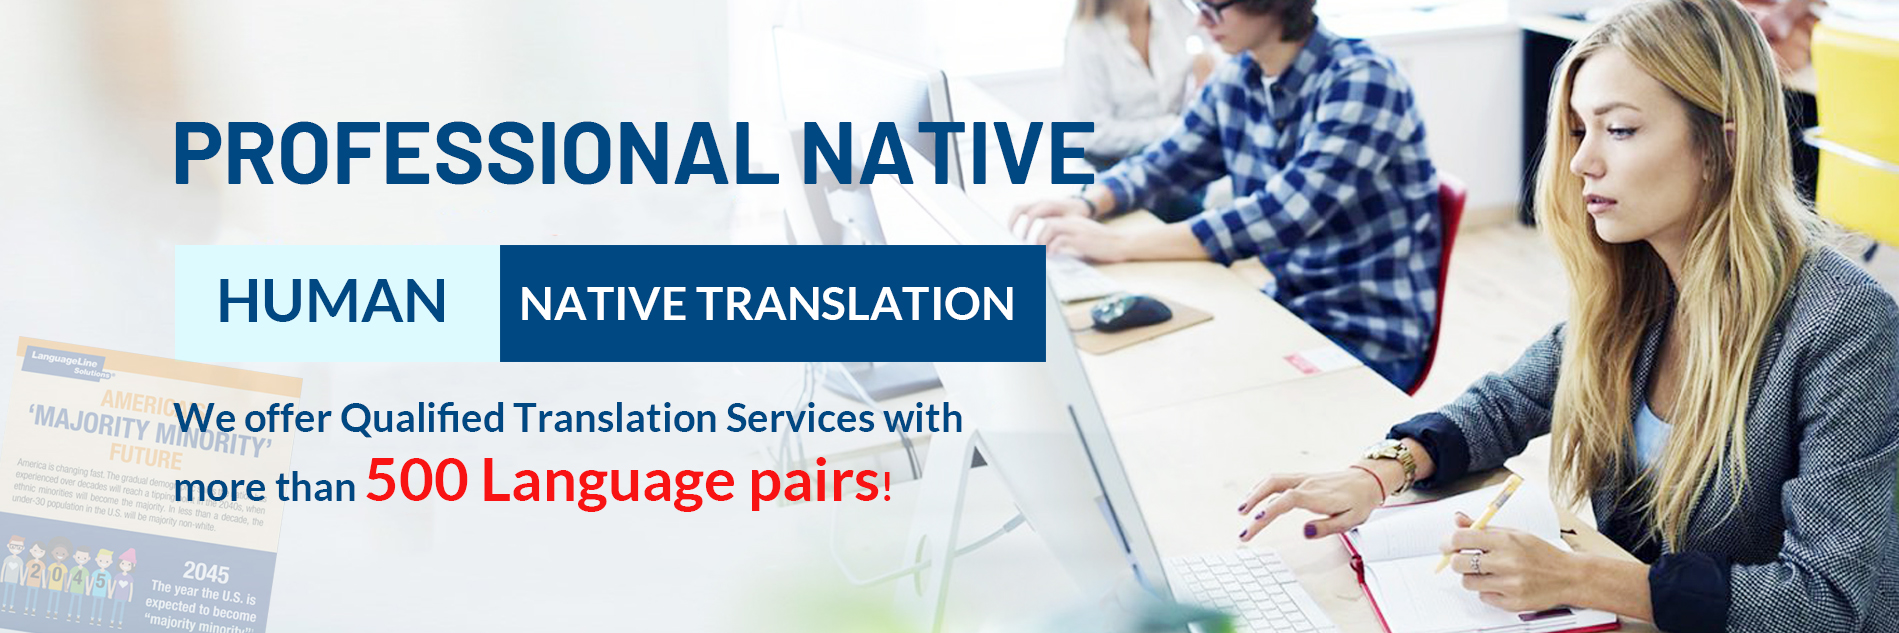 Professional native human translation provider